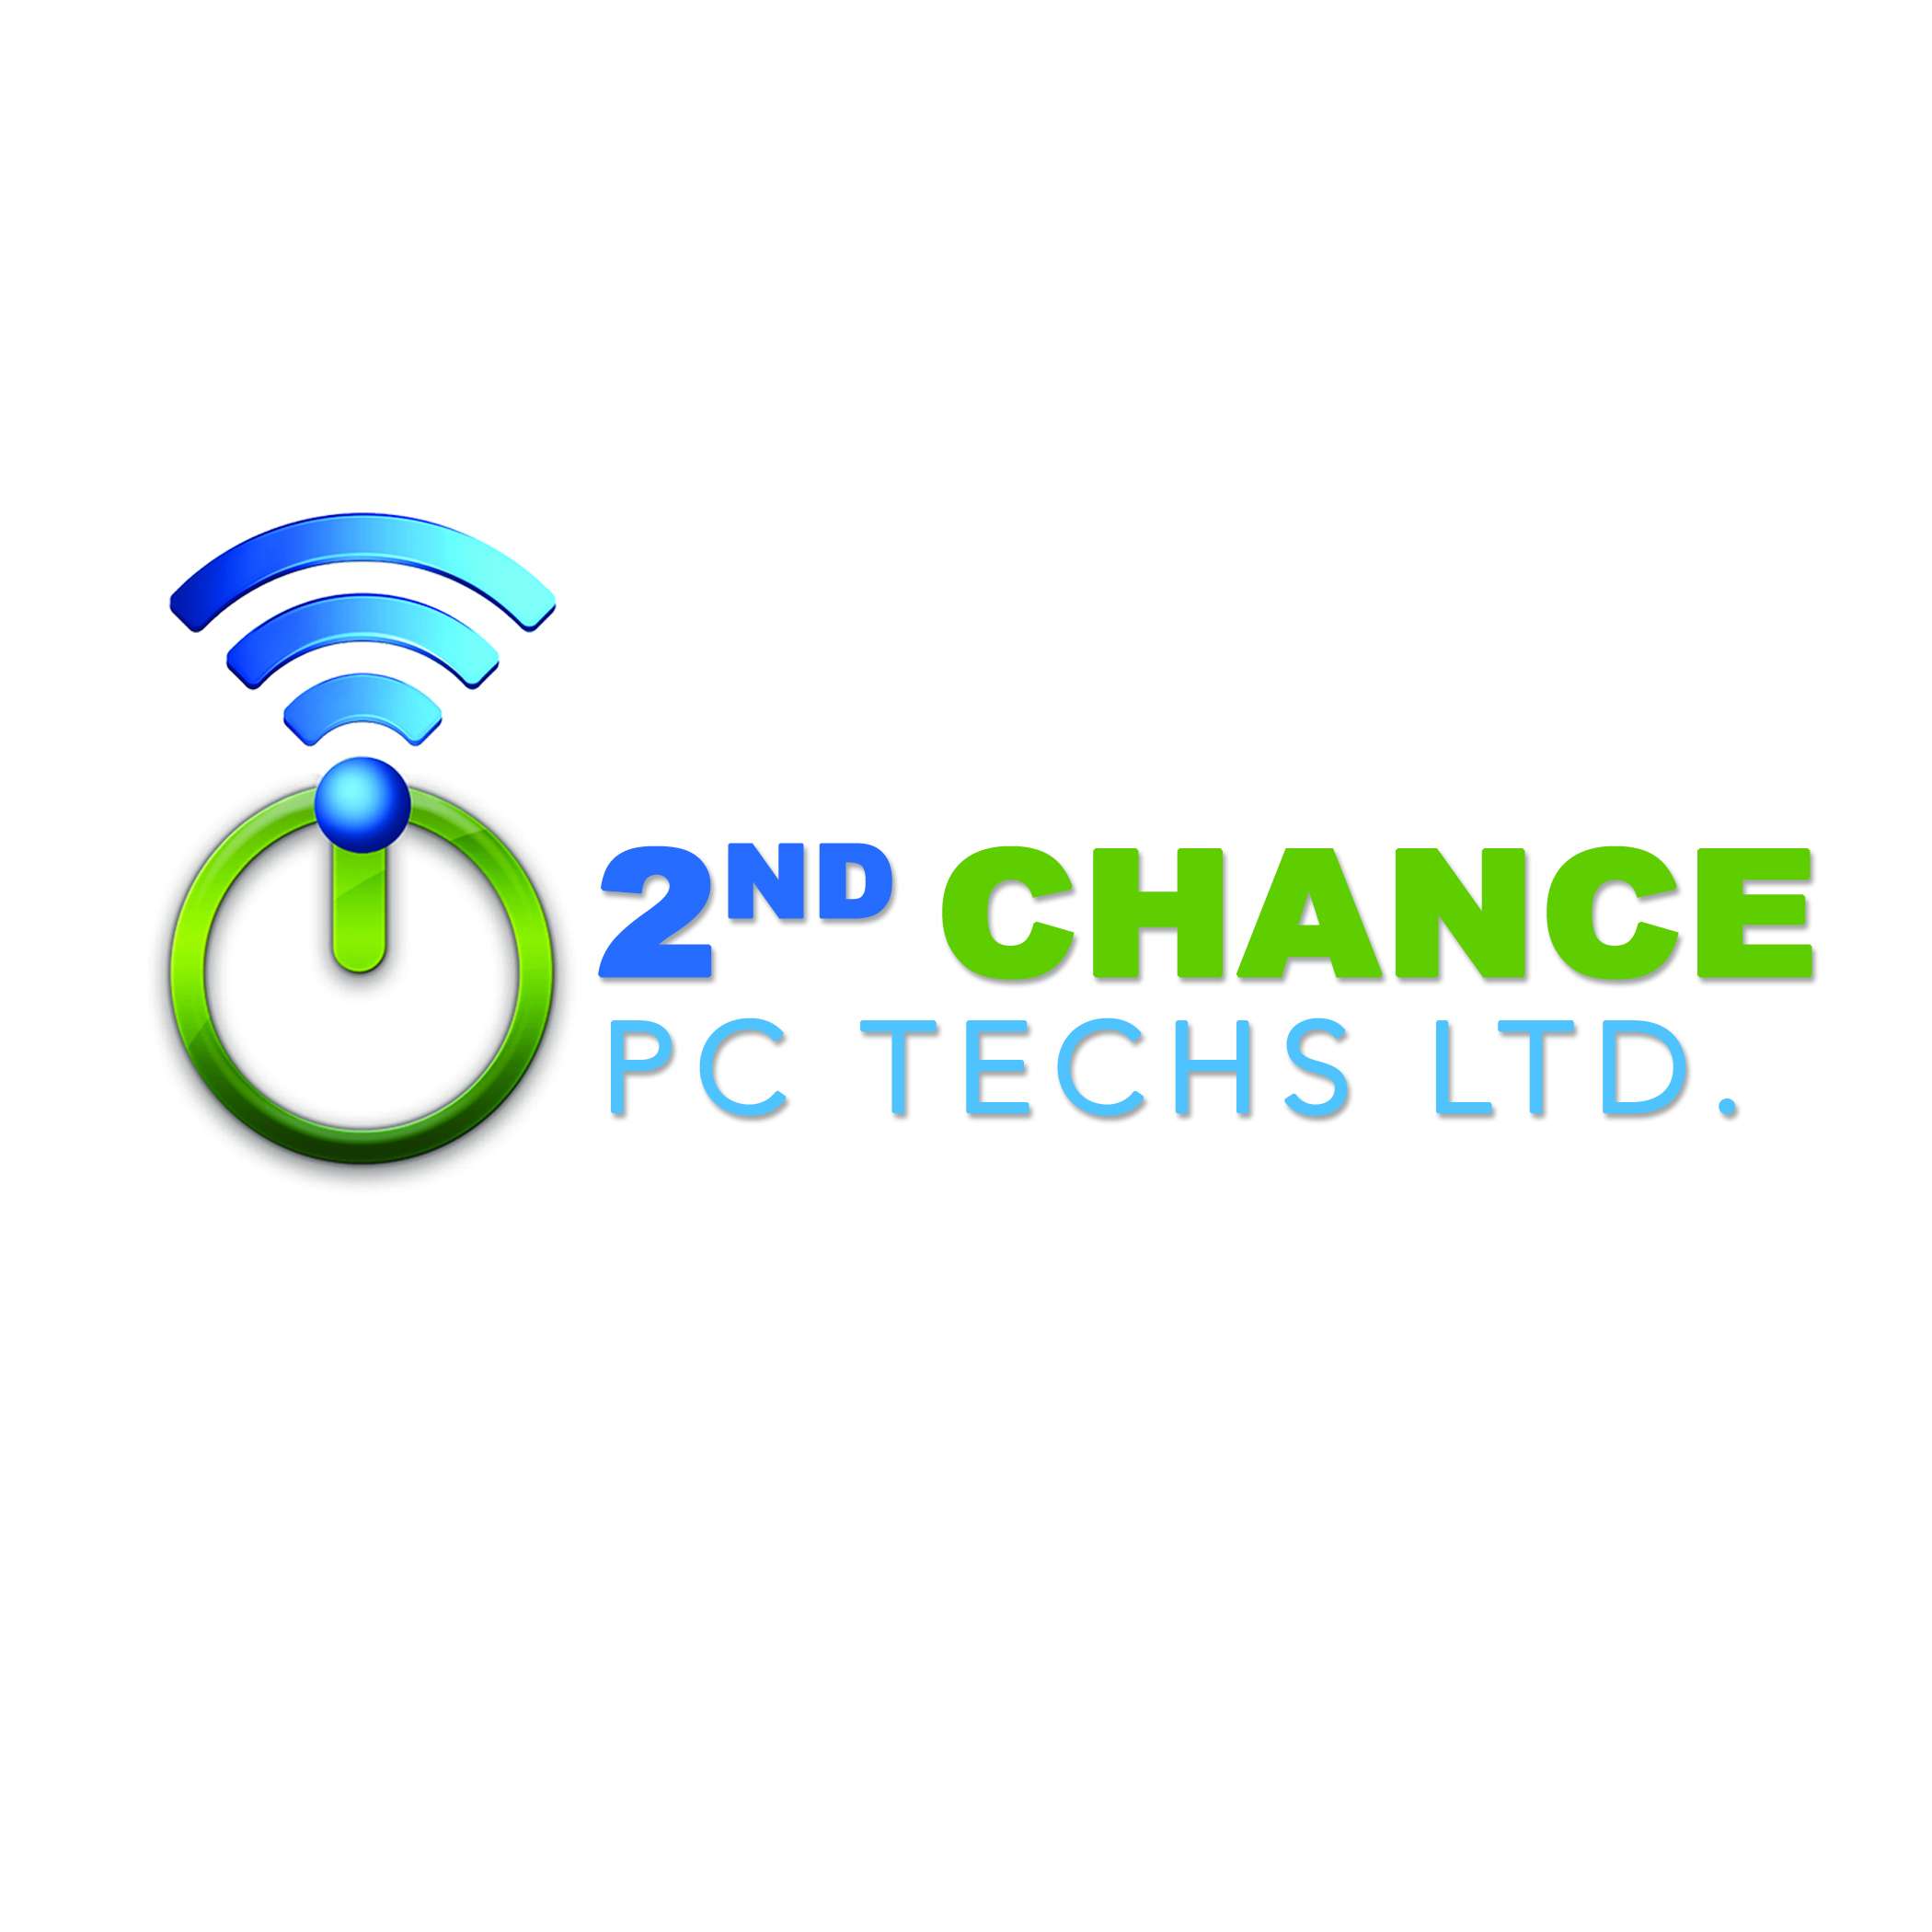 2nd Chance PC Techs LTD.